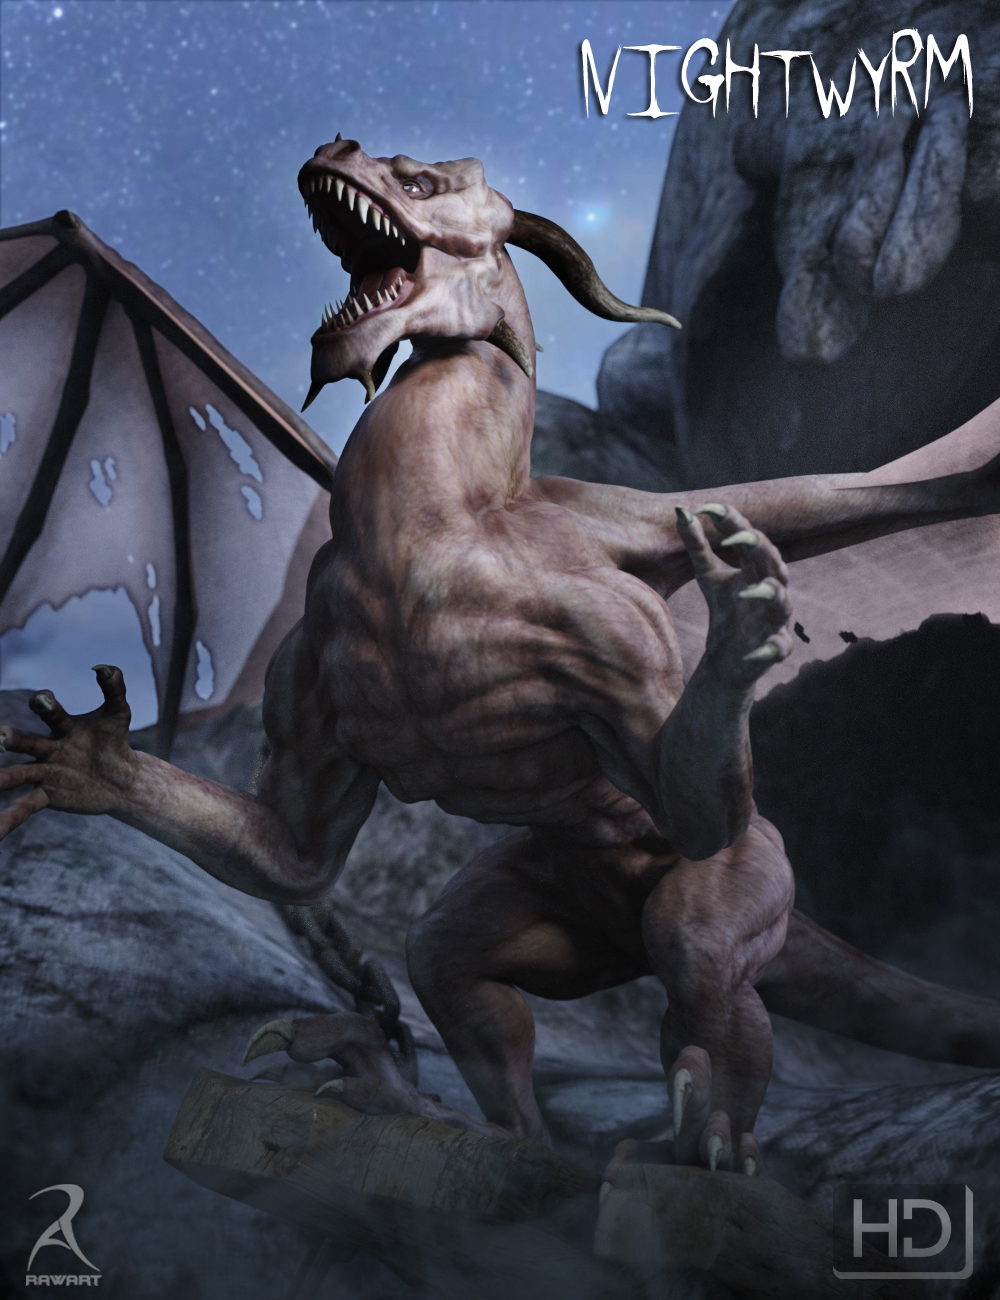 NightWyrm - The Vampire Dragon HD by: RawArt, 3D Models by Daz 3D